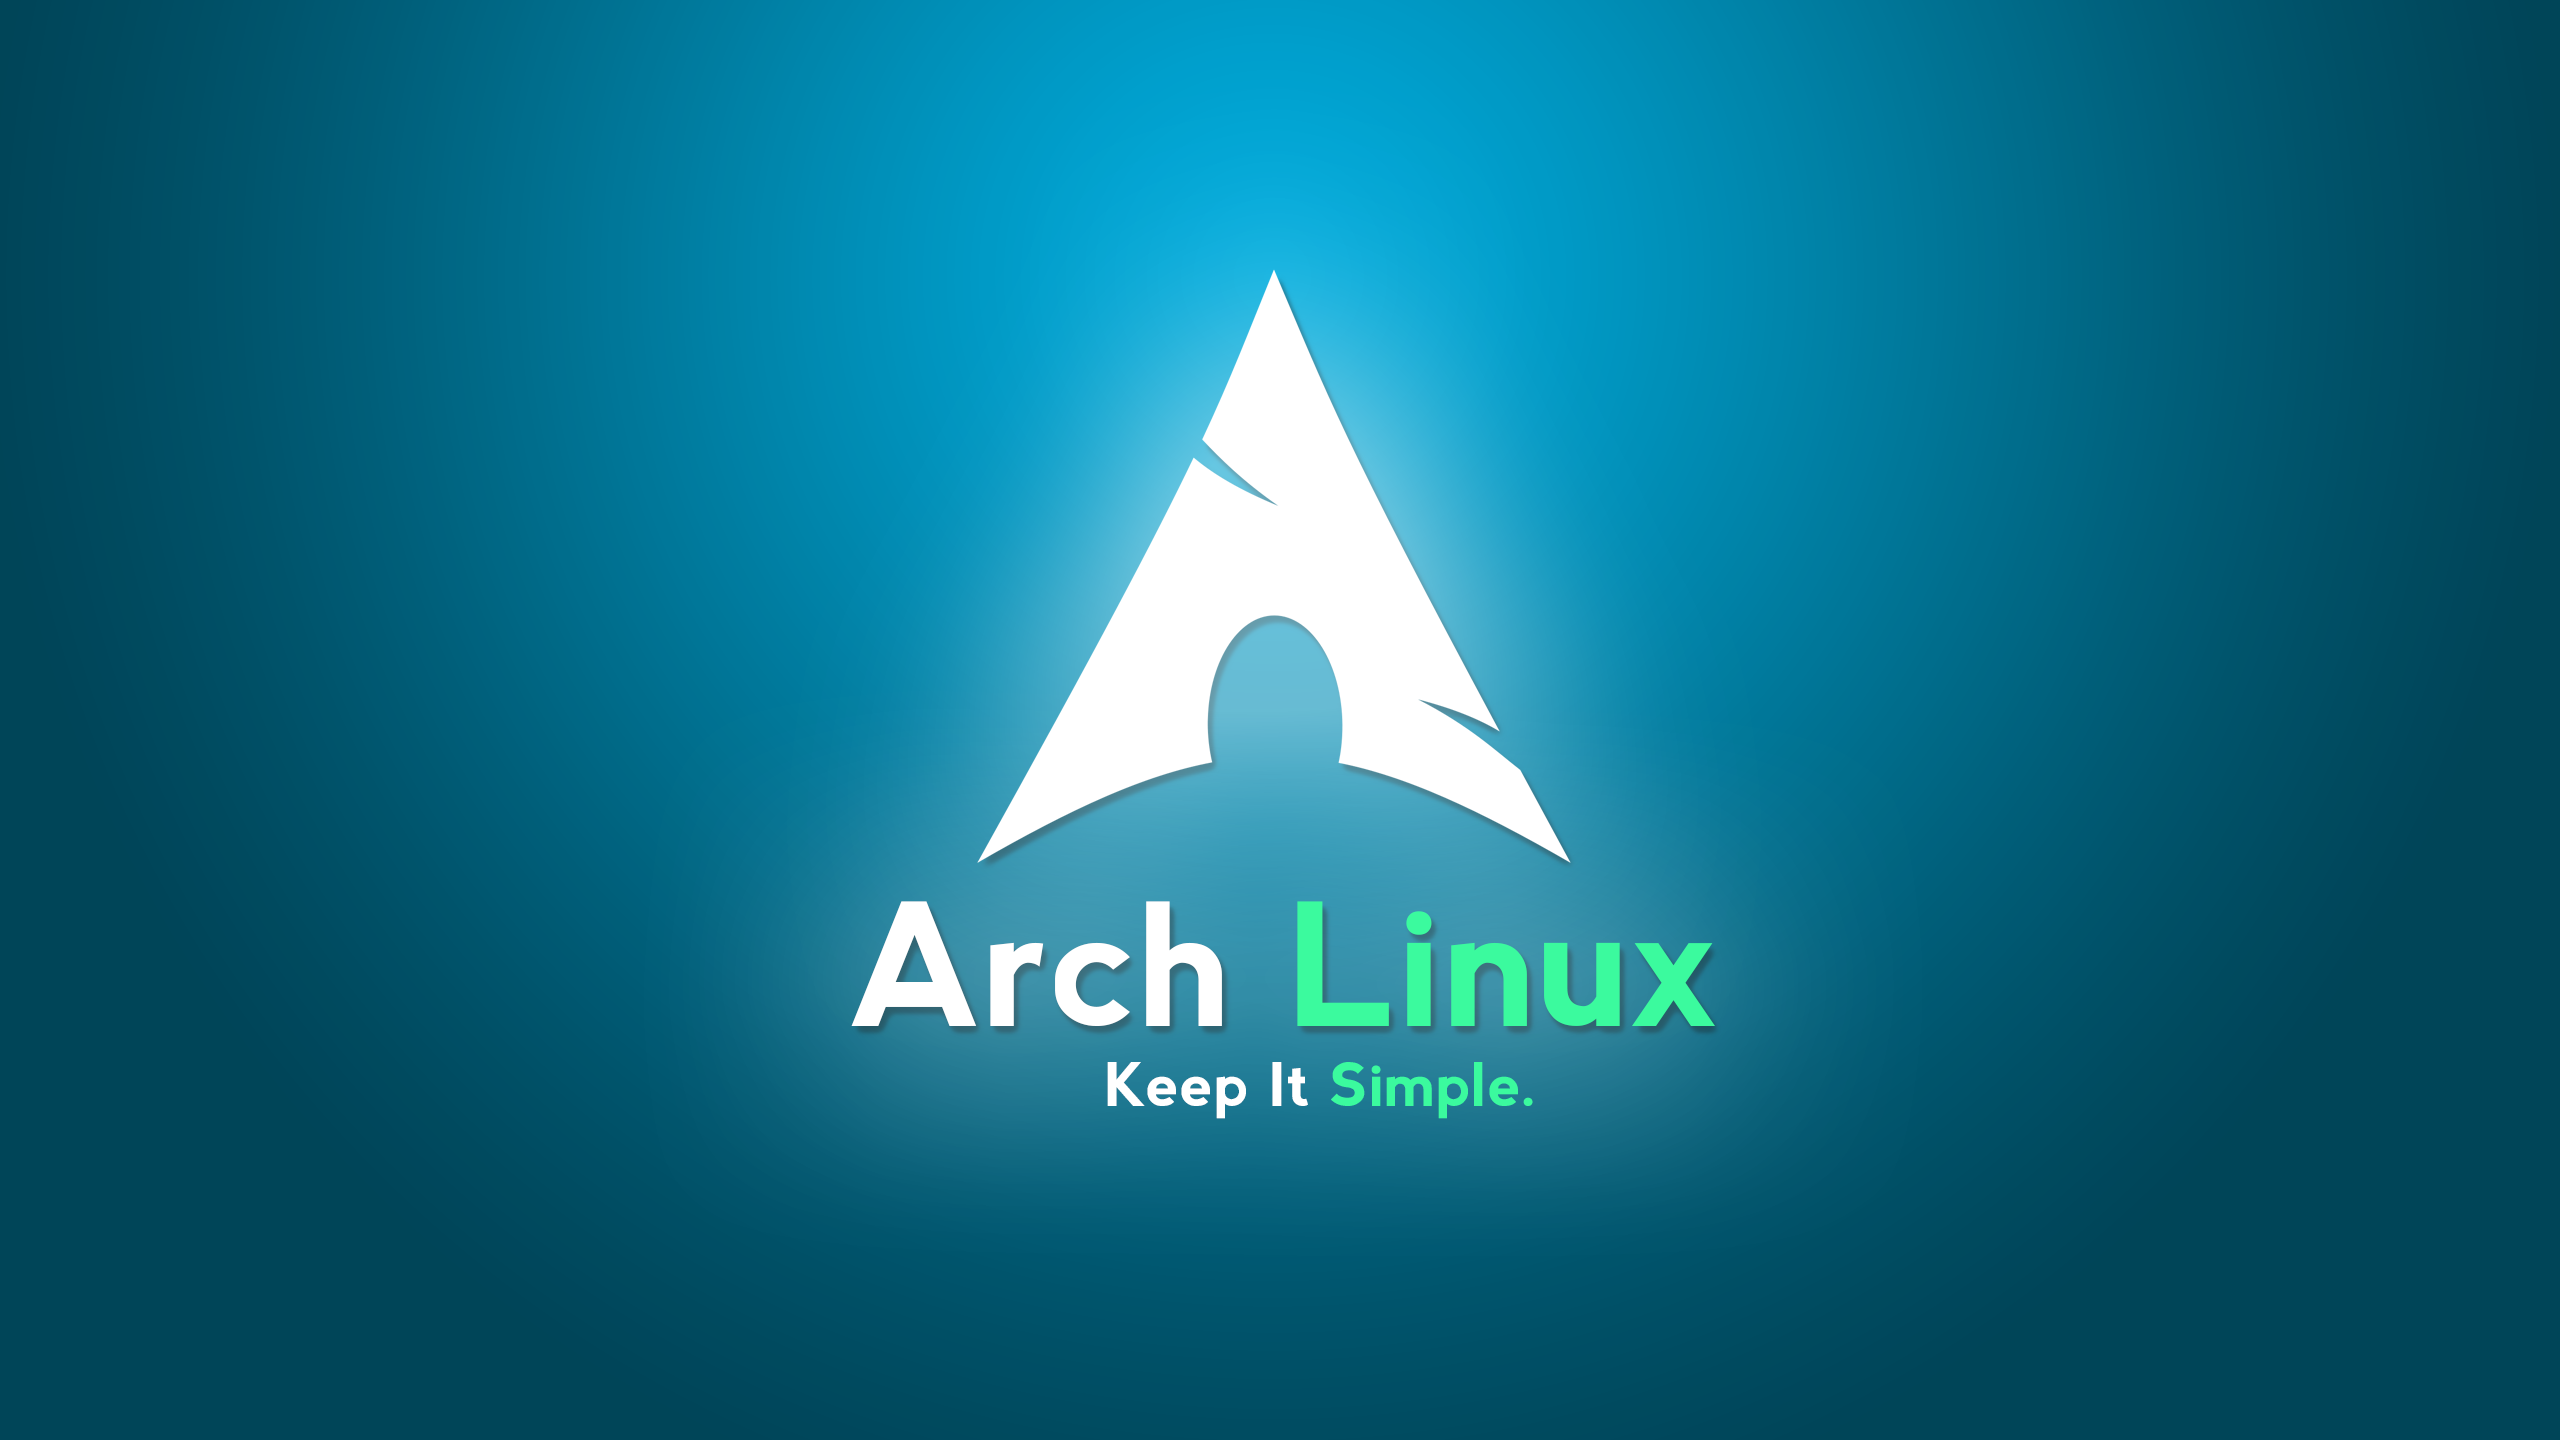 Best Arch Linux Desktop Environment Bombkery